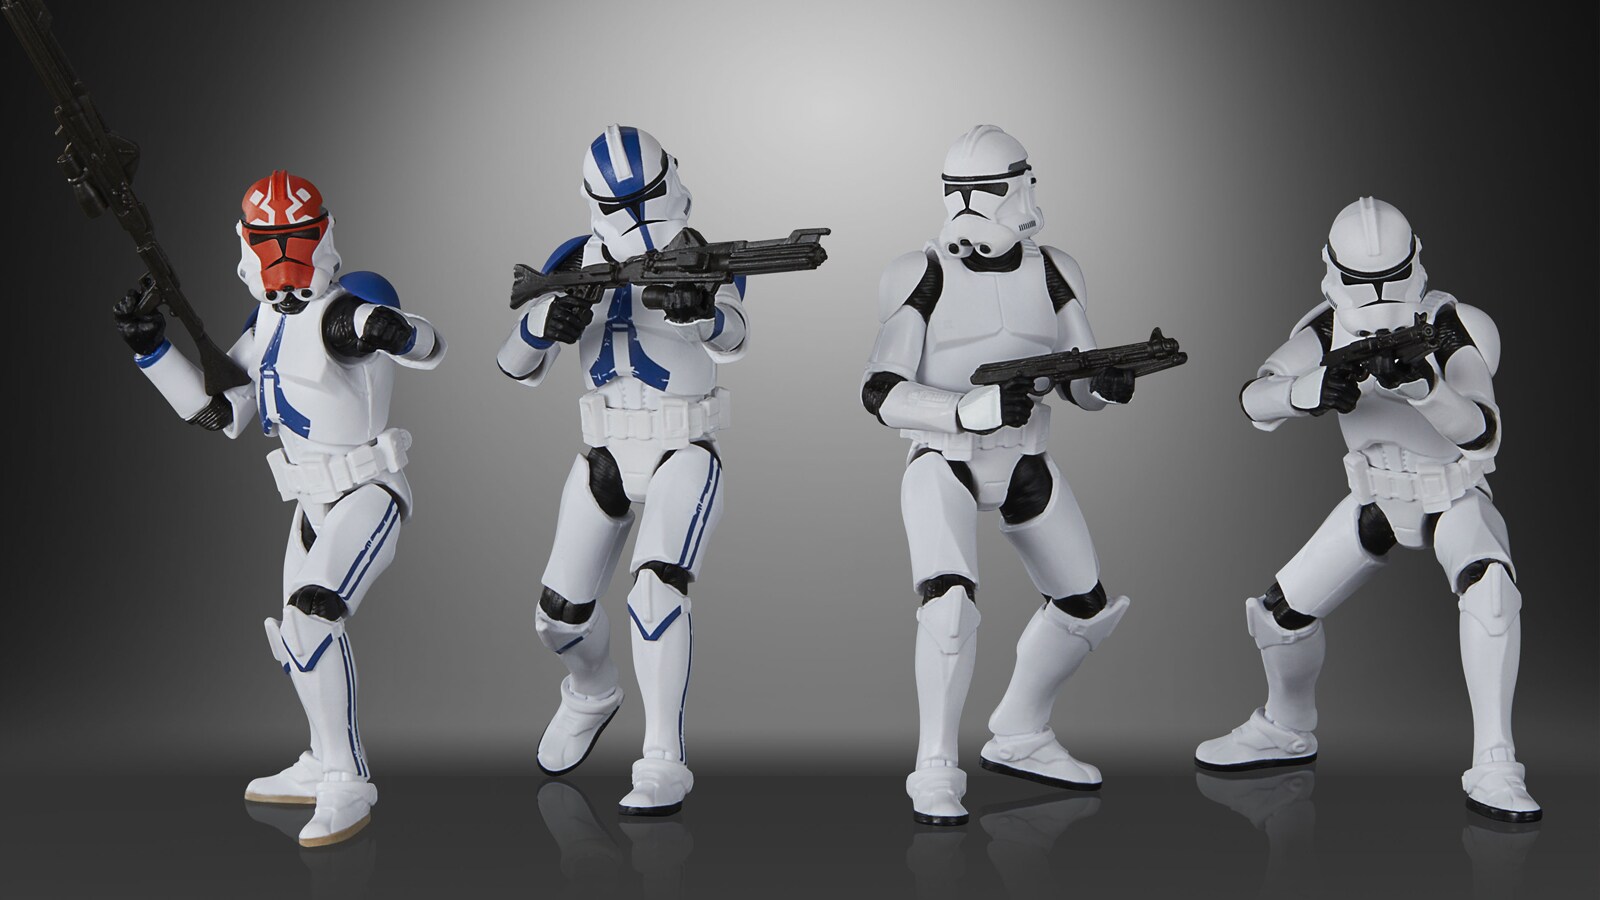 Star Wars Black Series Phase II Clone Trooper (The Clone Wars) Hasbro